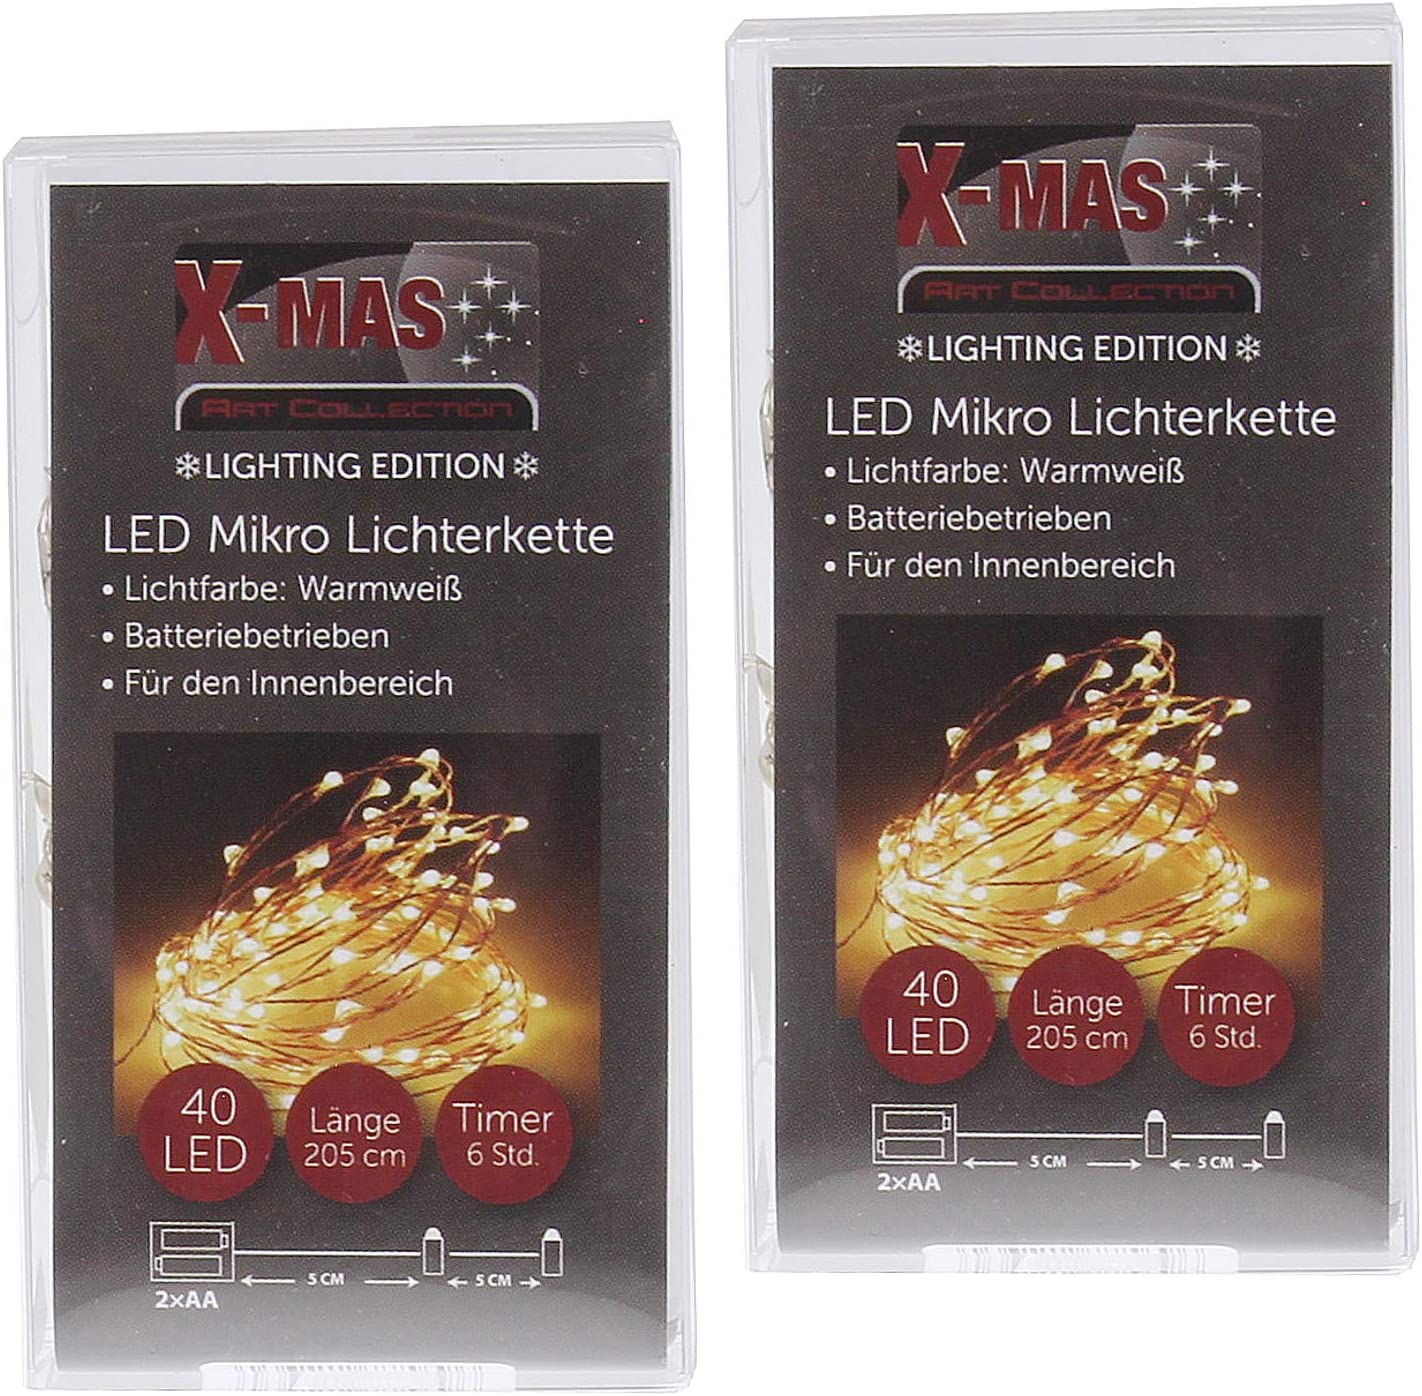 X-MAS LED Mikro Lichterkette 40 LED mit Timer